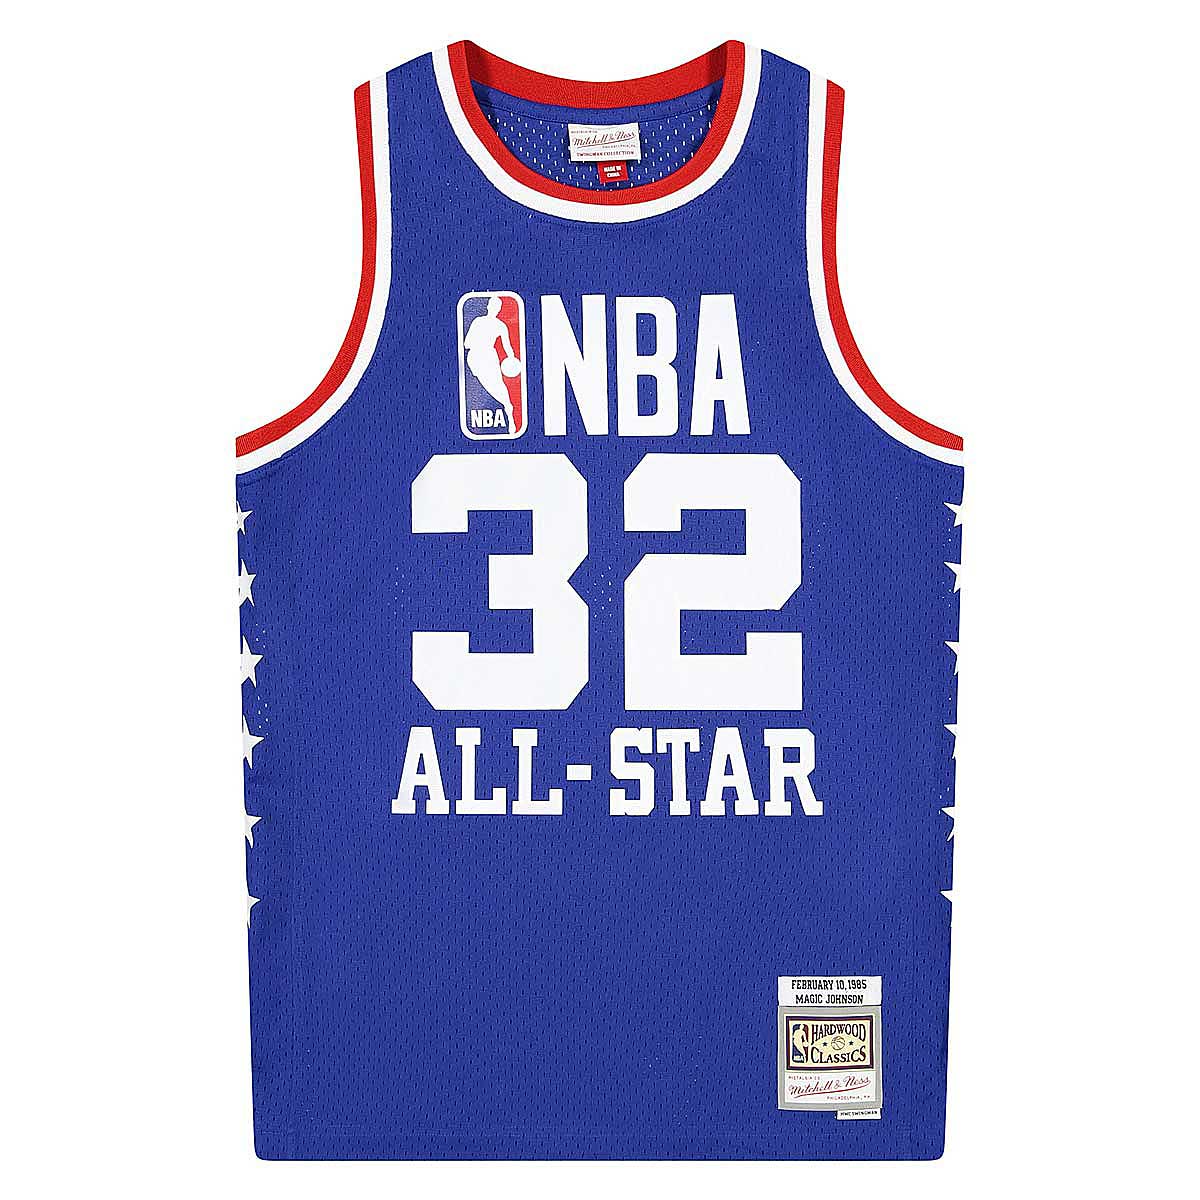 Buy NBA SWINGMAN JERSEY 2.0 ALL STAR WEST M. JOHNSON for N/A 0.0 on  !